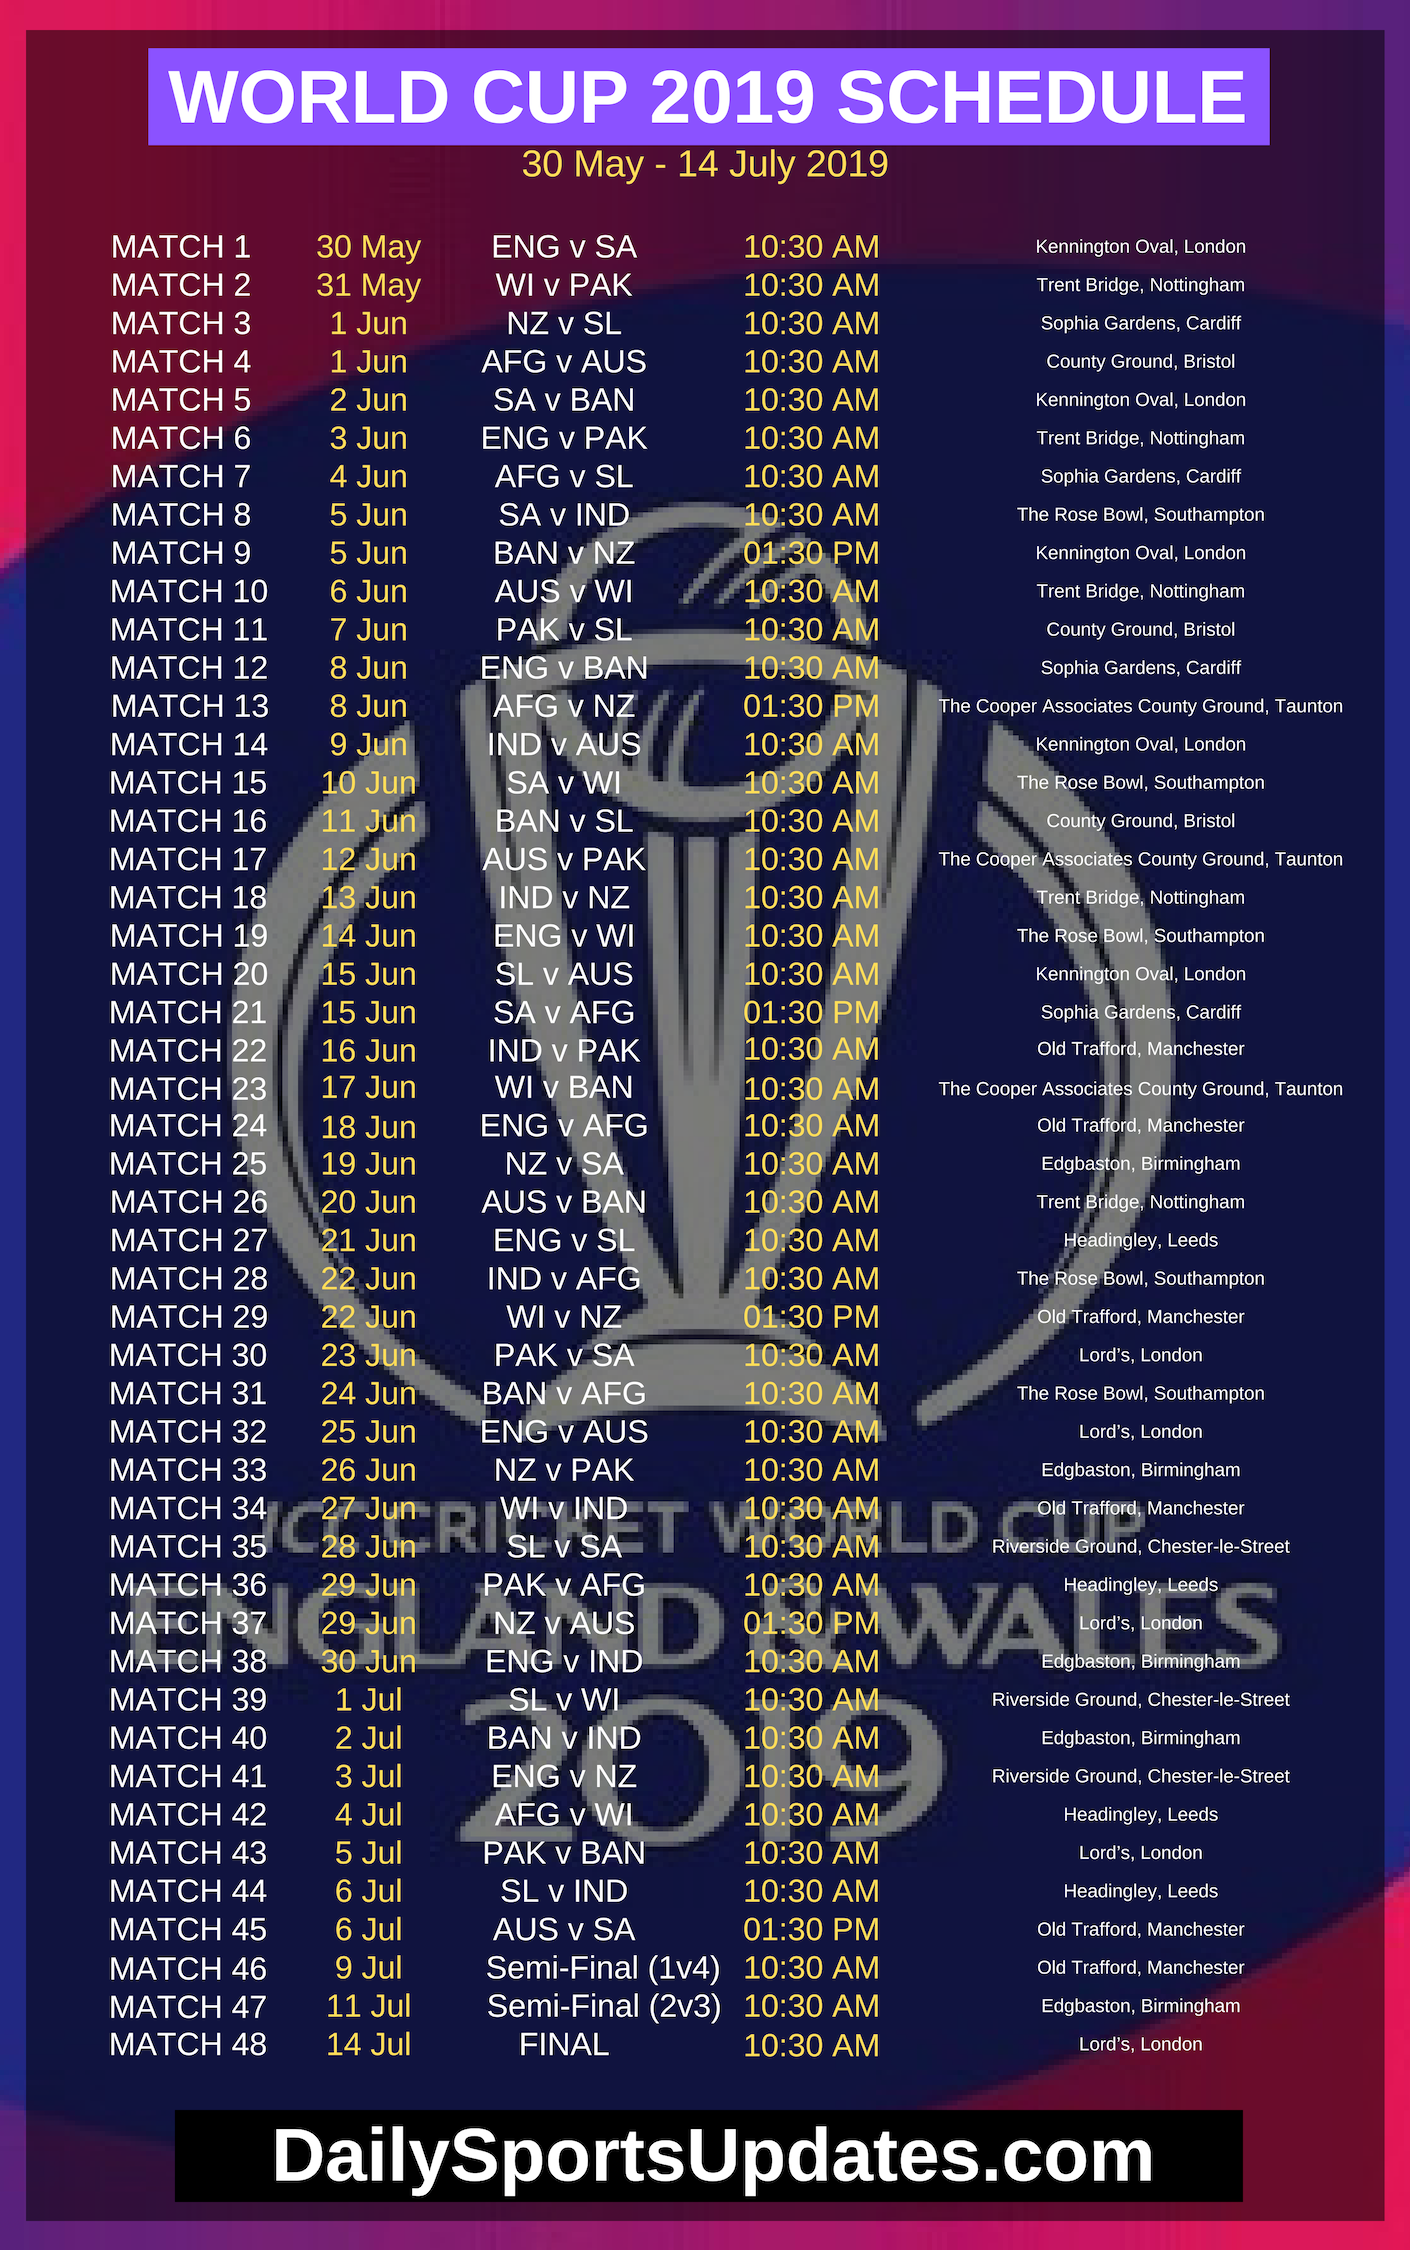 ICC Cricket World Cup 2019 Complete Schedule